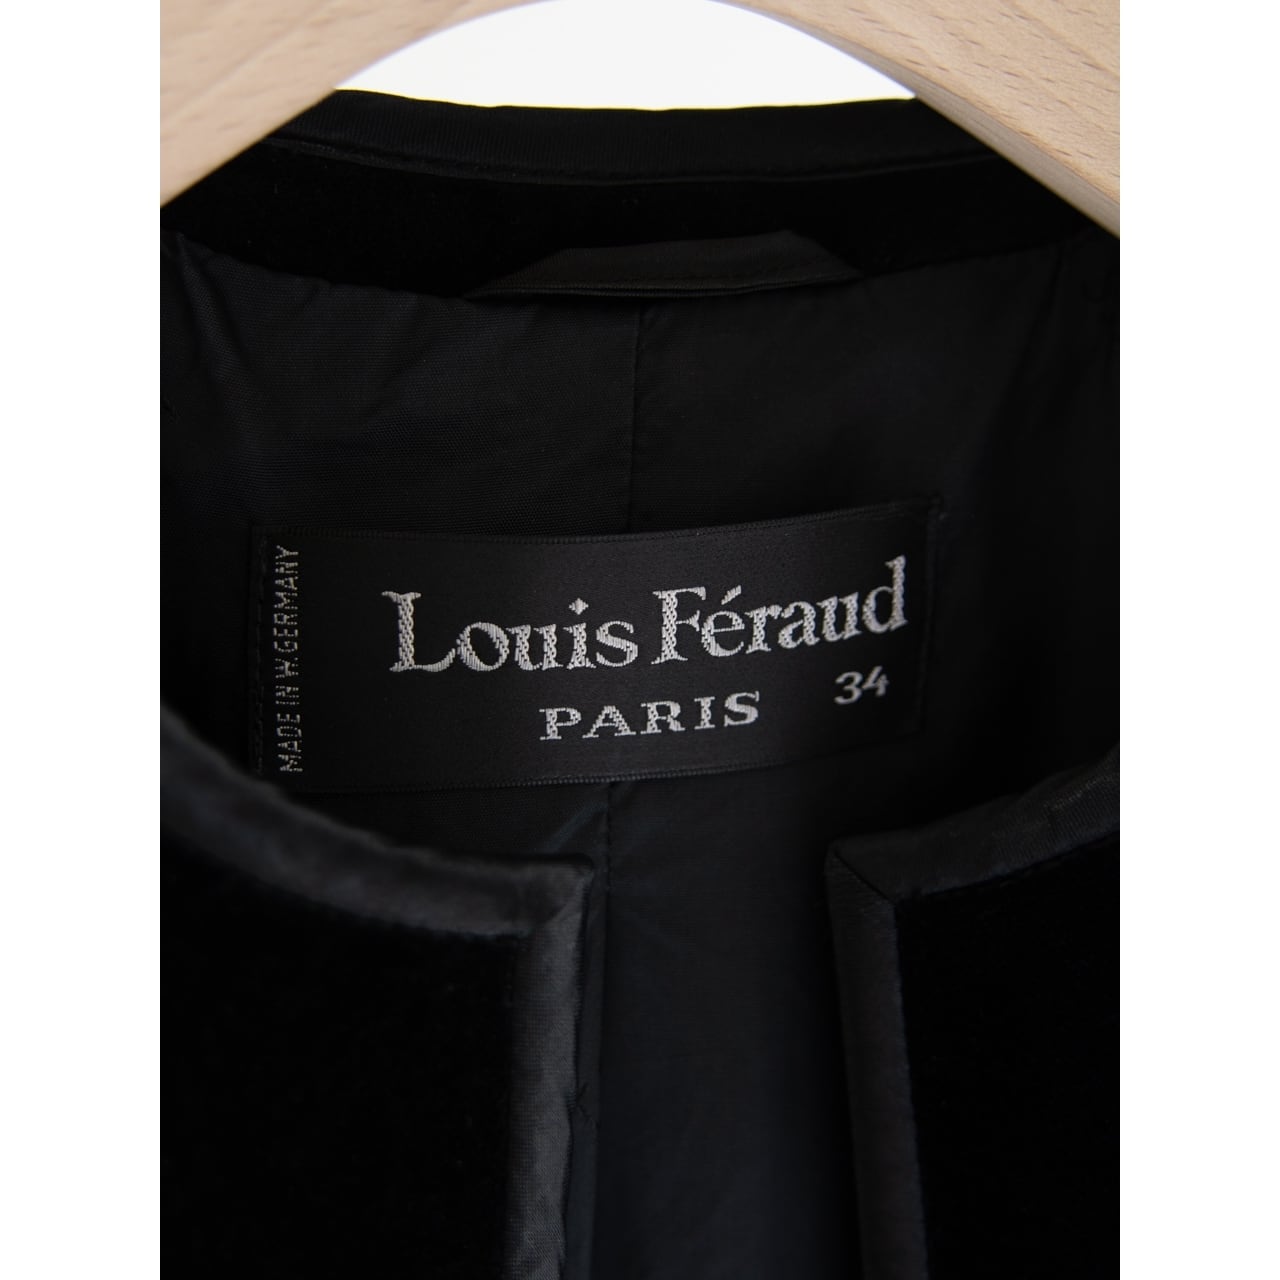 Louis Feraud PARIS】Made in W.Germany 100% Cotton Velvet ...